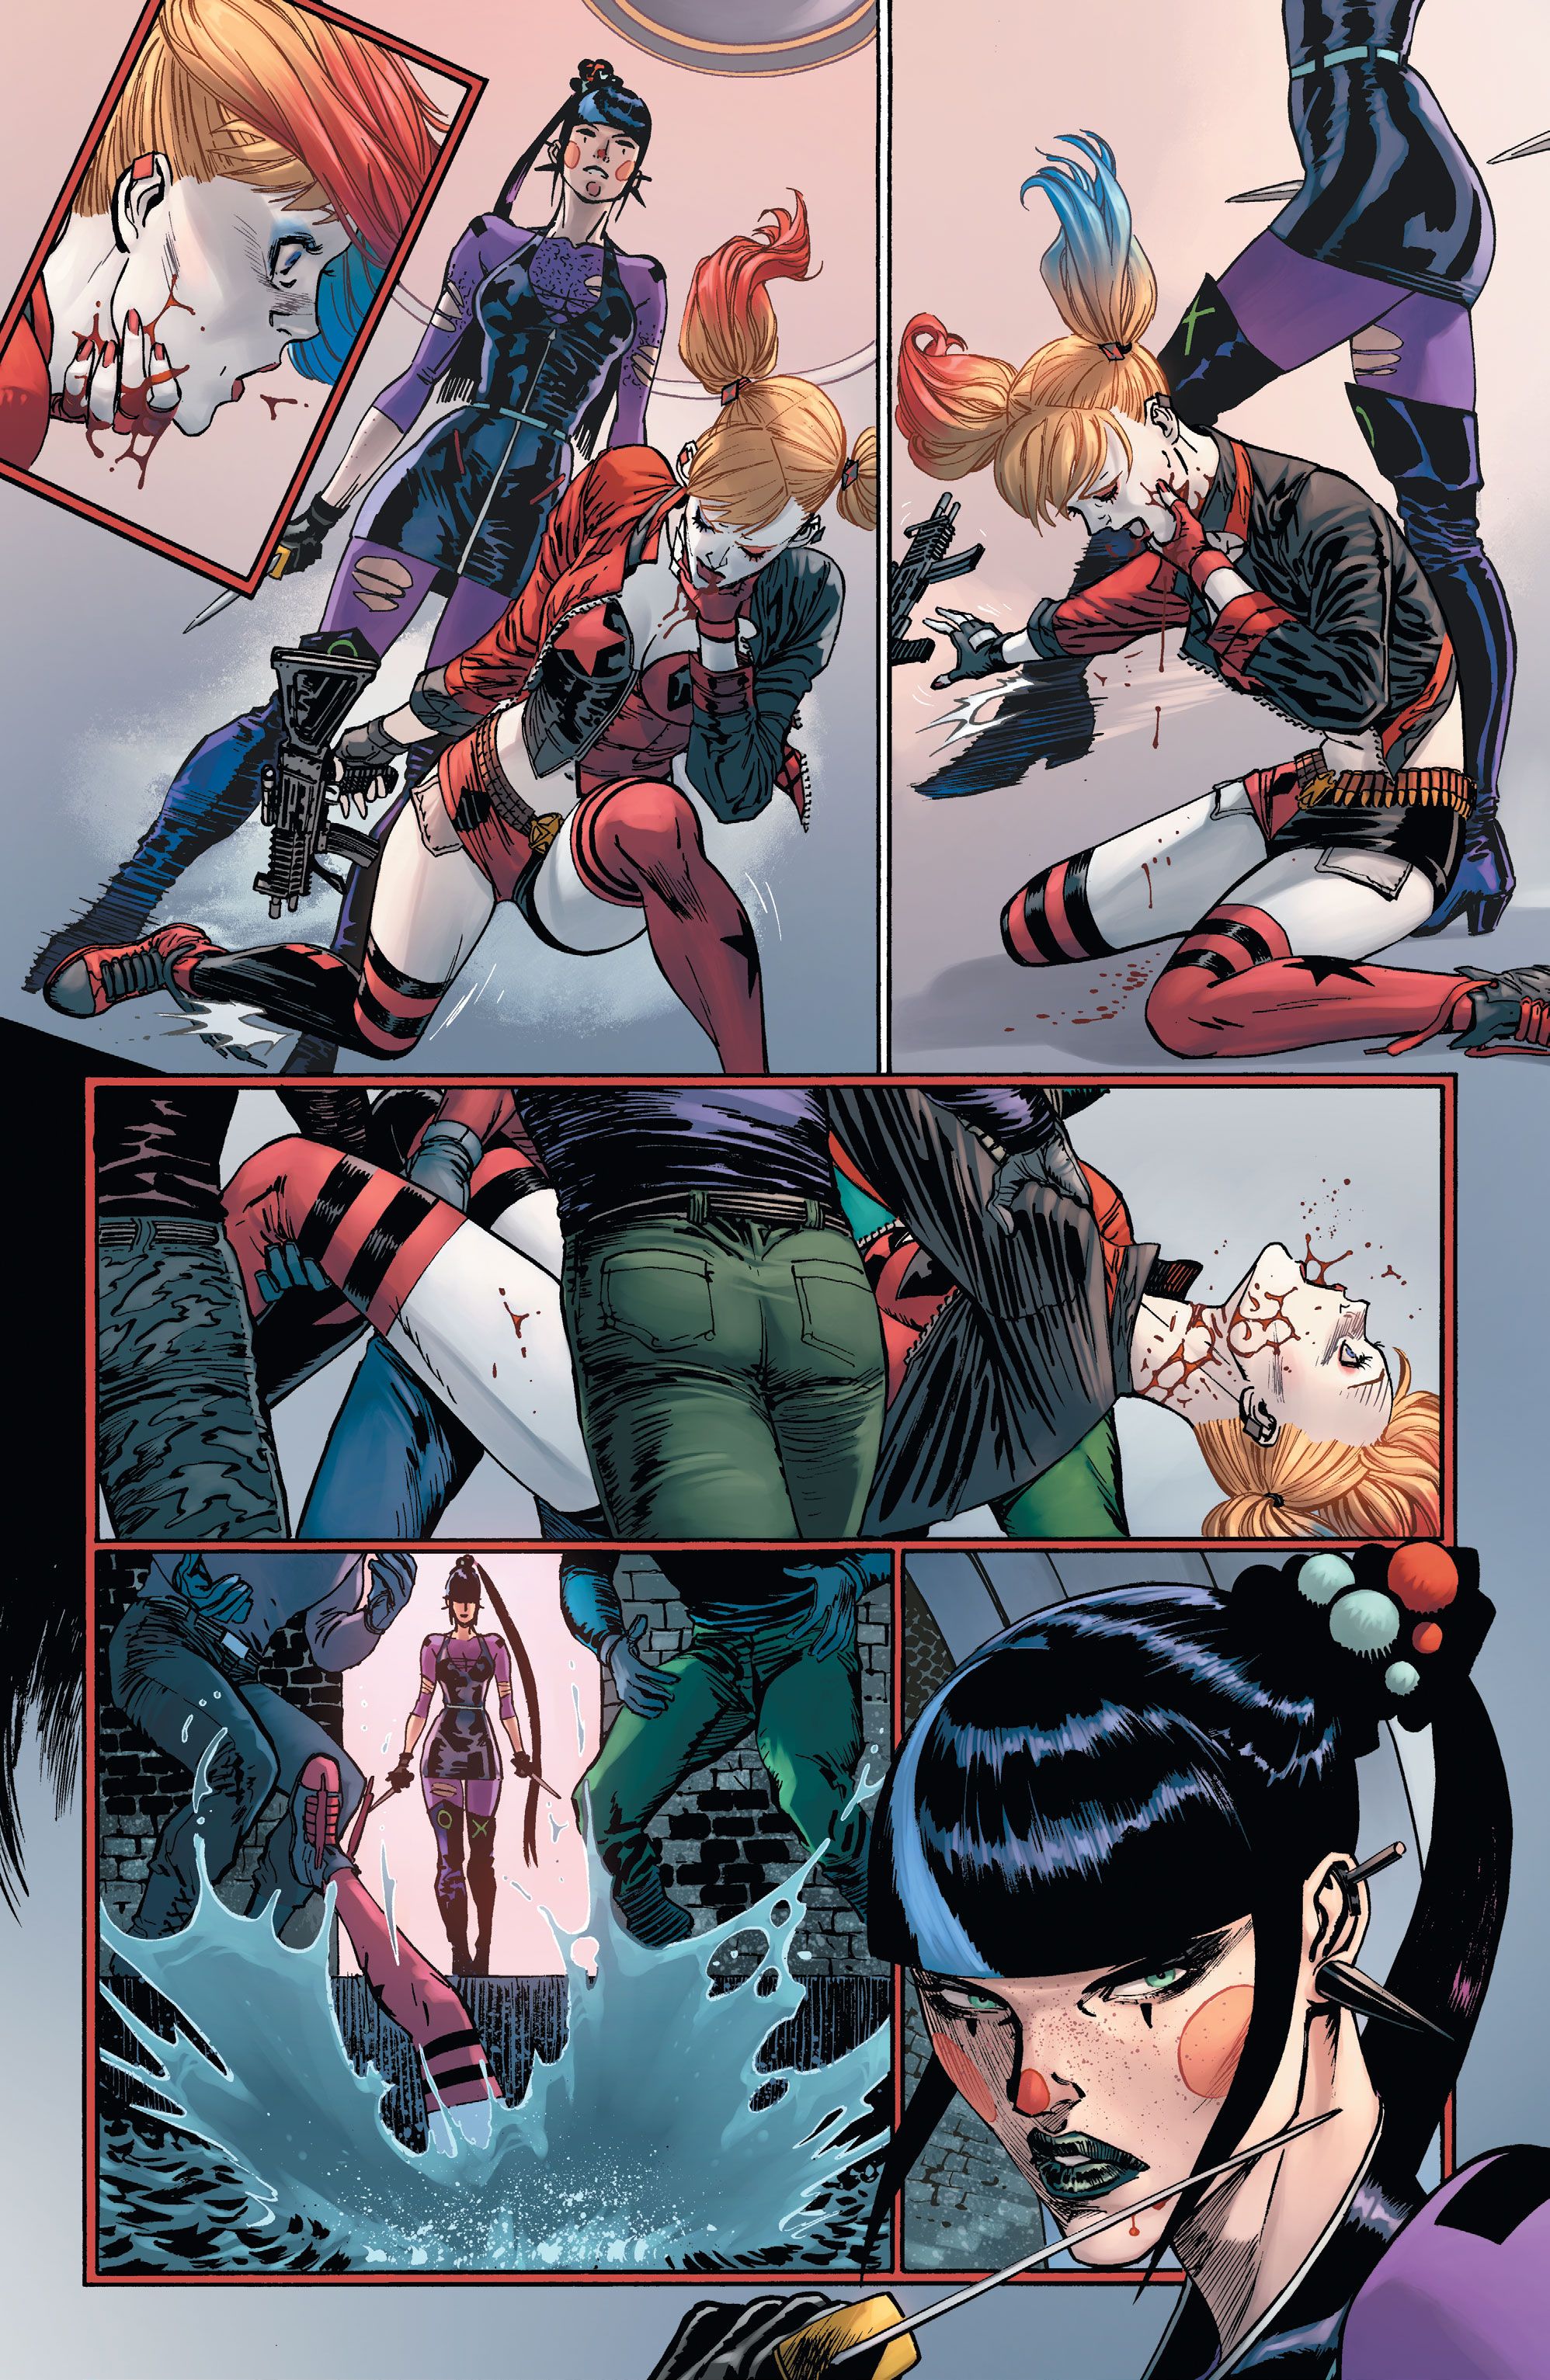 Joker’s New Girlfriend Violently Tries To Kill Harley Quinn